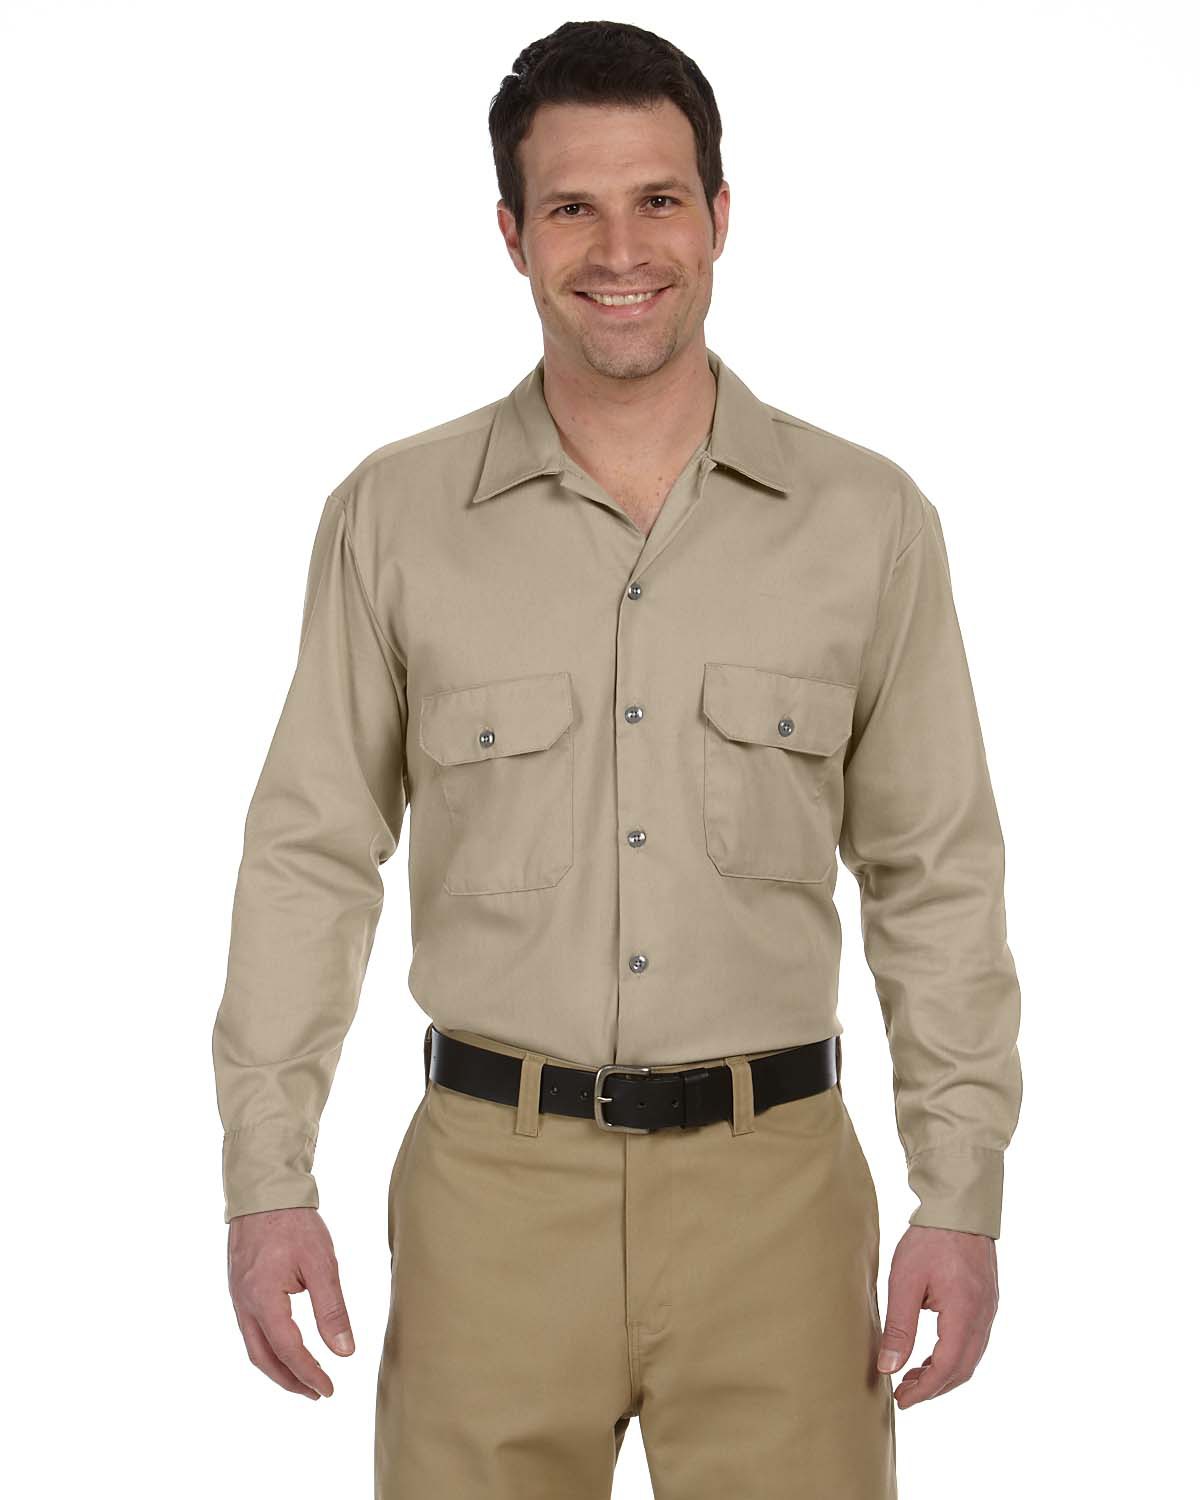 Dickies Mens Khaki Long Sleeve Work Shirt Uniform Button Up Casual Shirt 574 